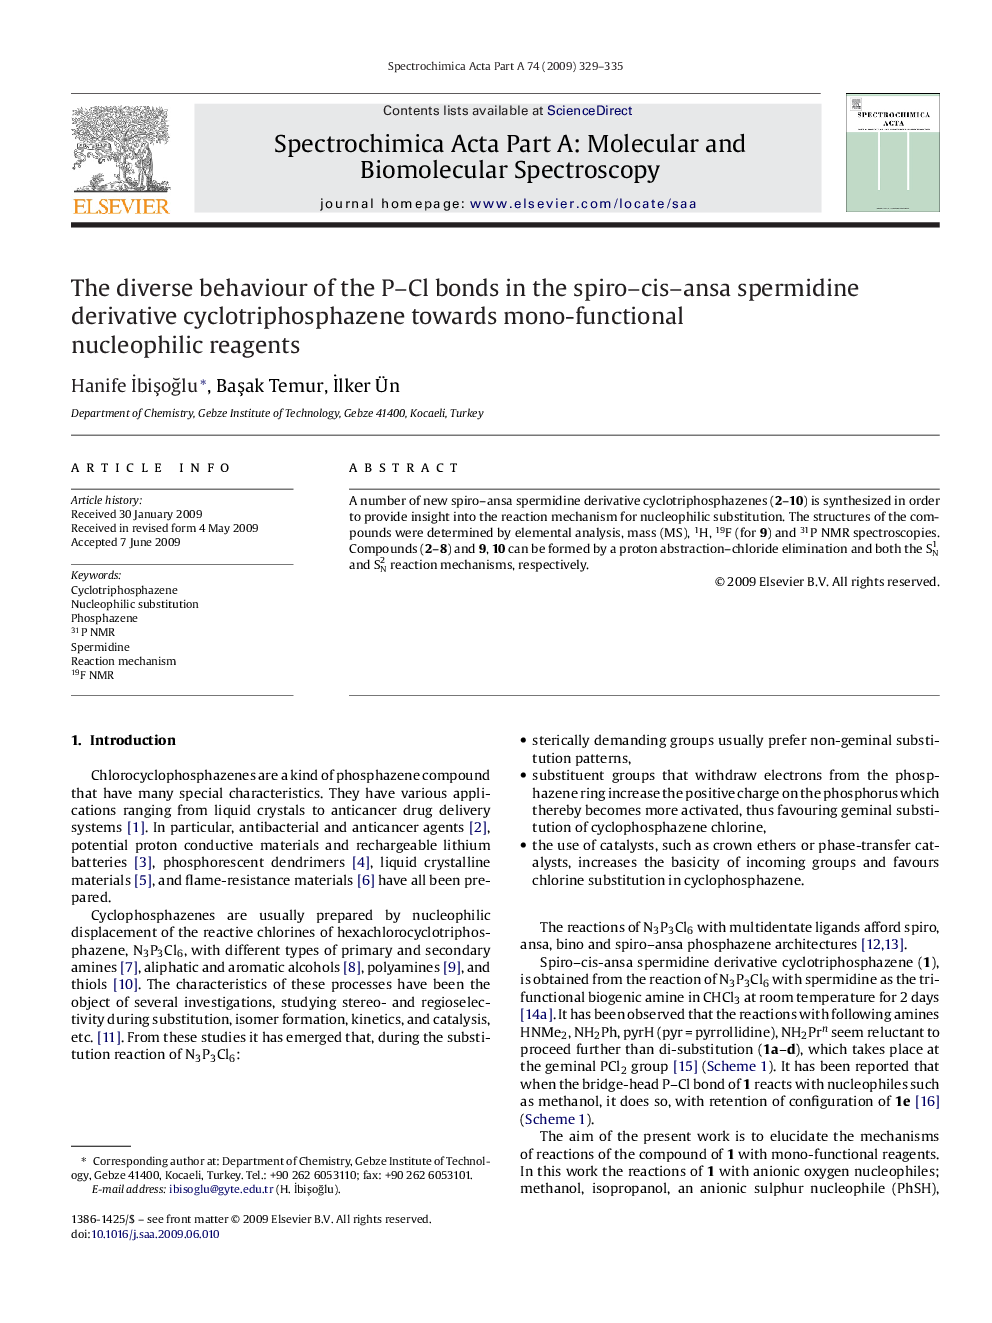 The diverse behaviour of the P-Cl bonds in the spiro-cis-ansa spermidine derivative cyclotriphosphazene towards mono-functional nucleophilic reagents